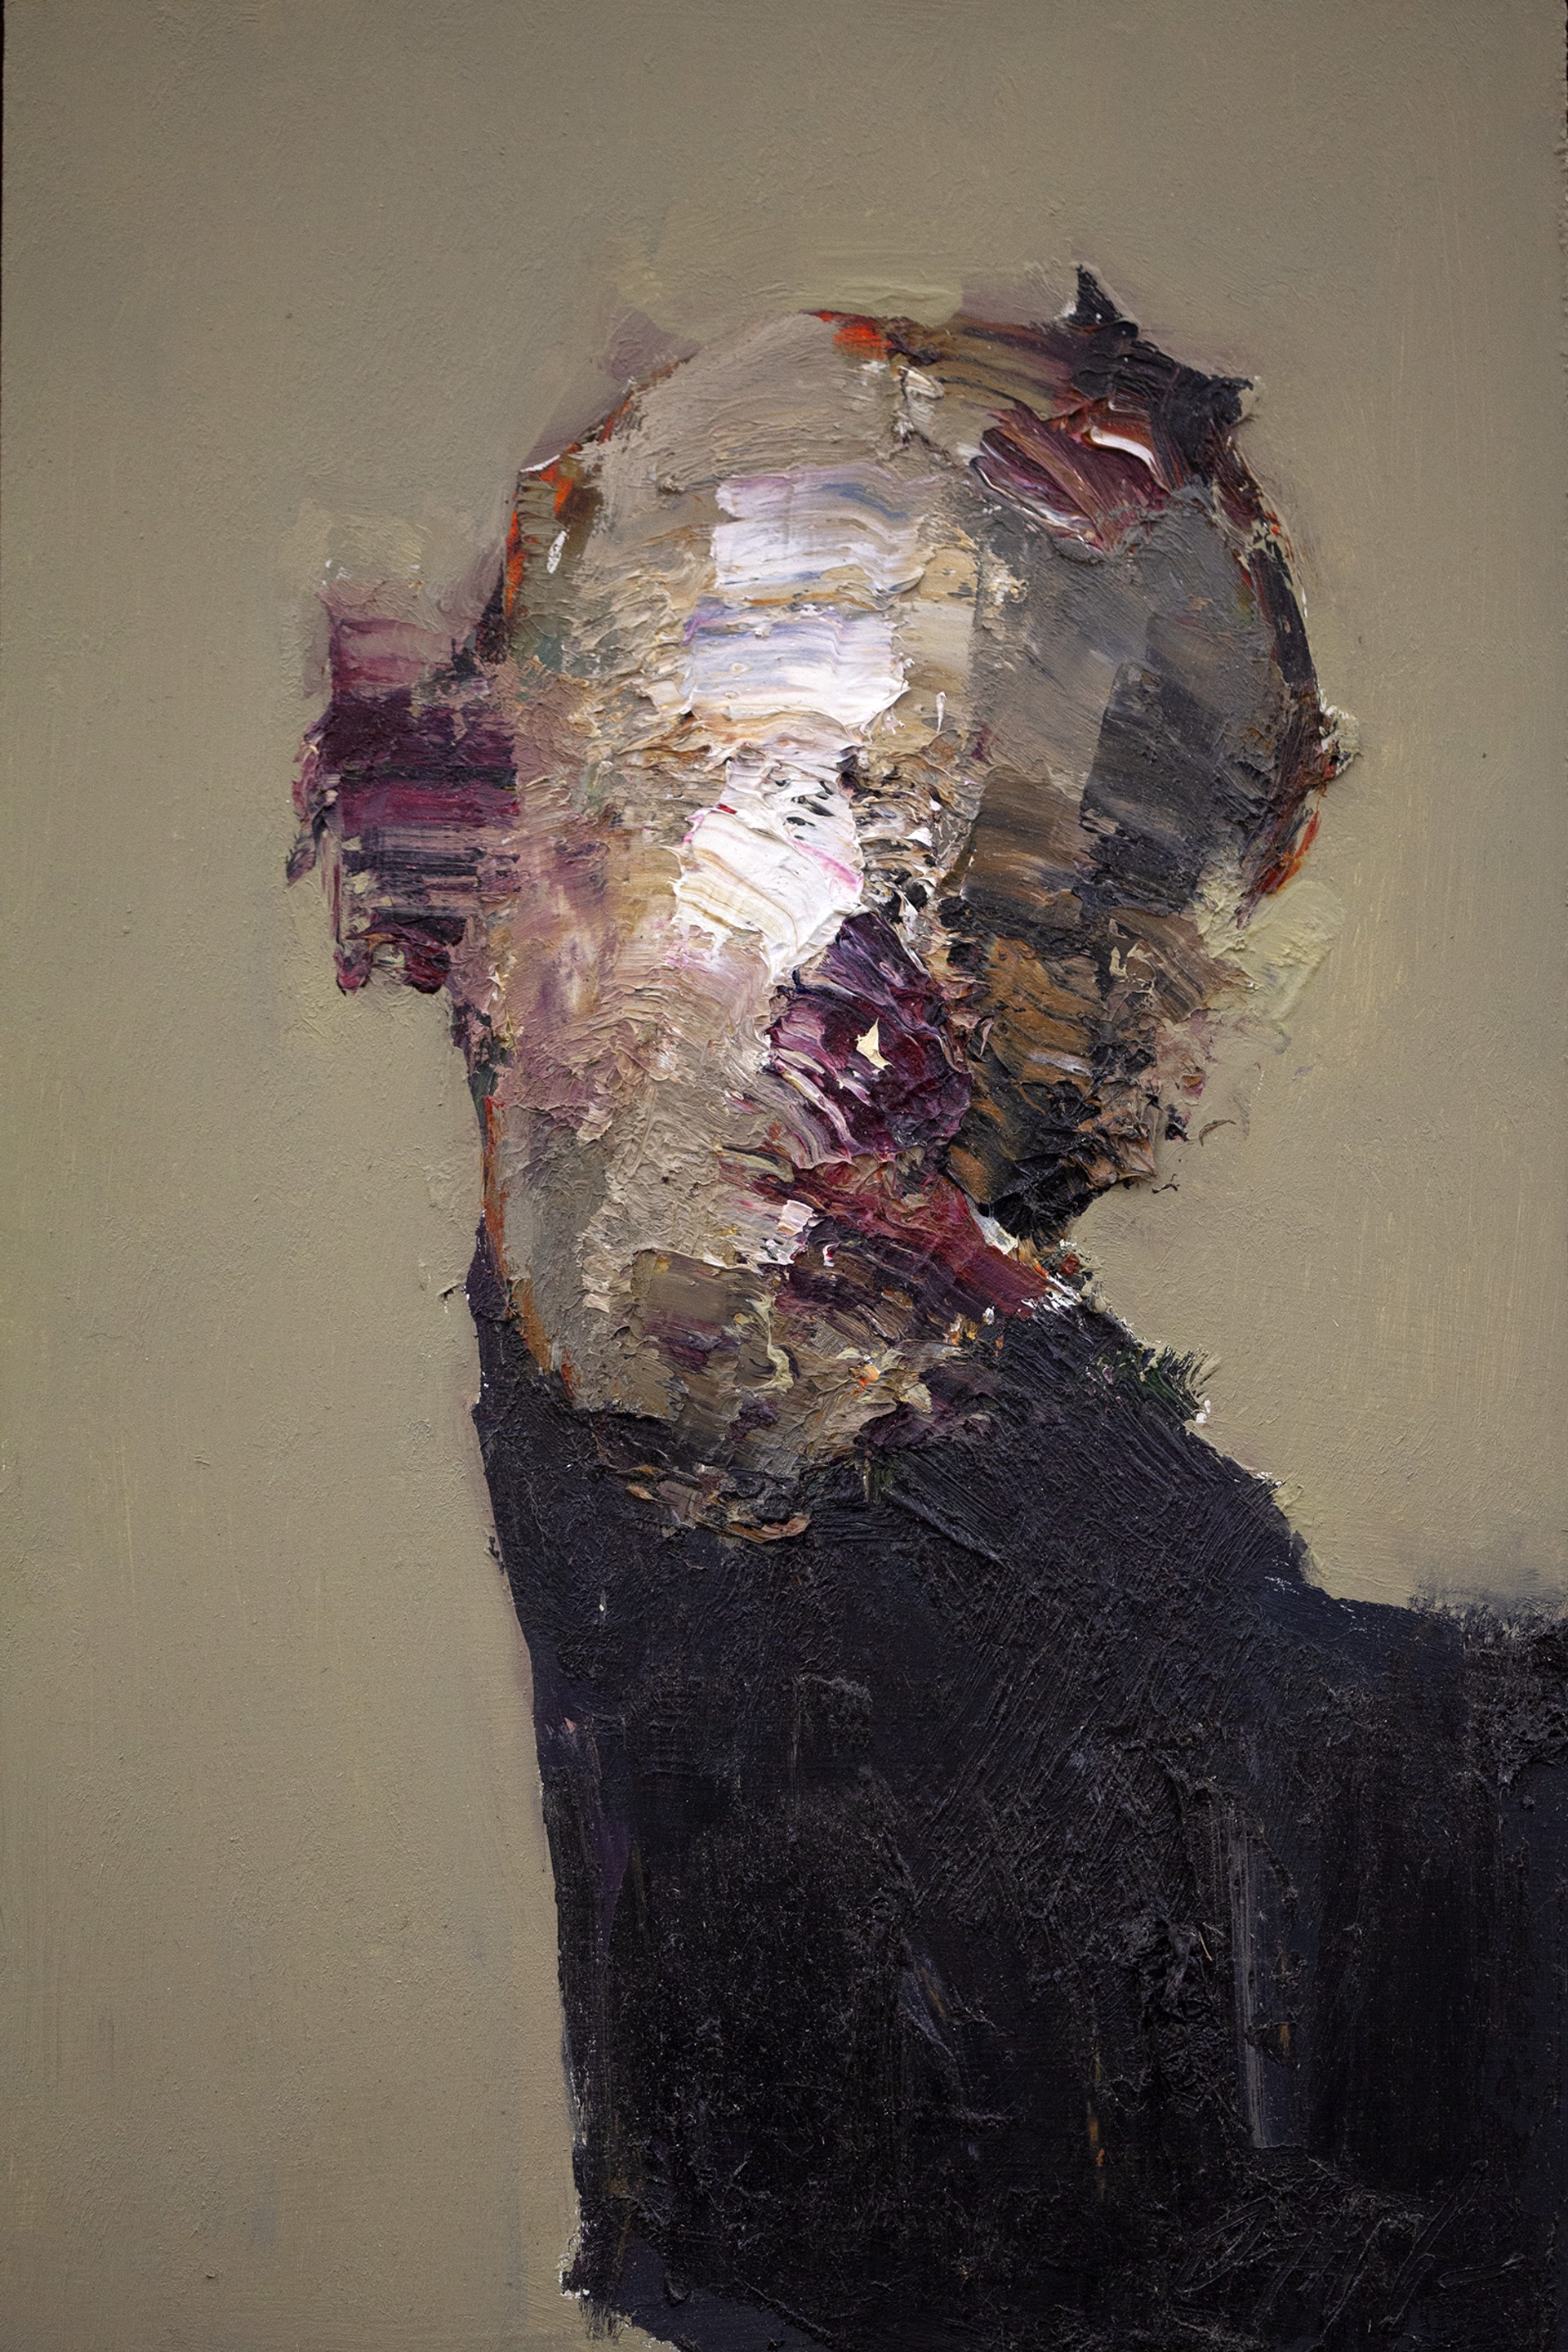 Head 1 by Danny McCaw